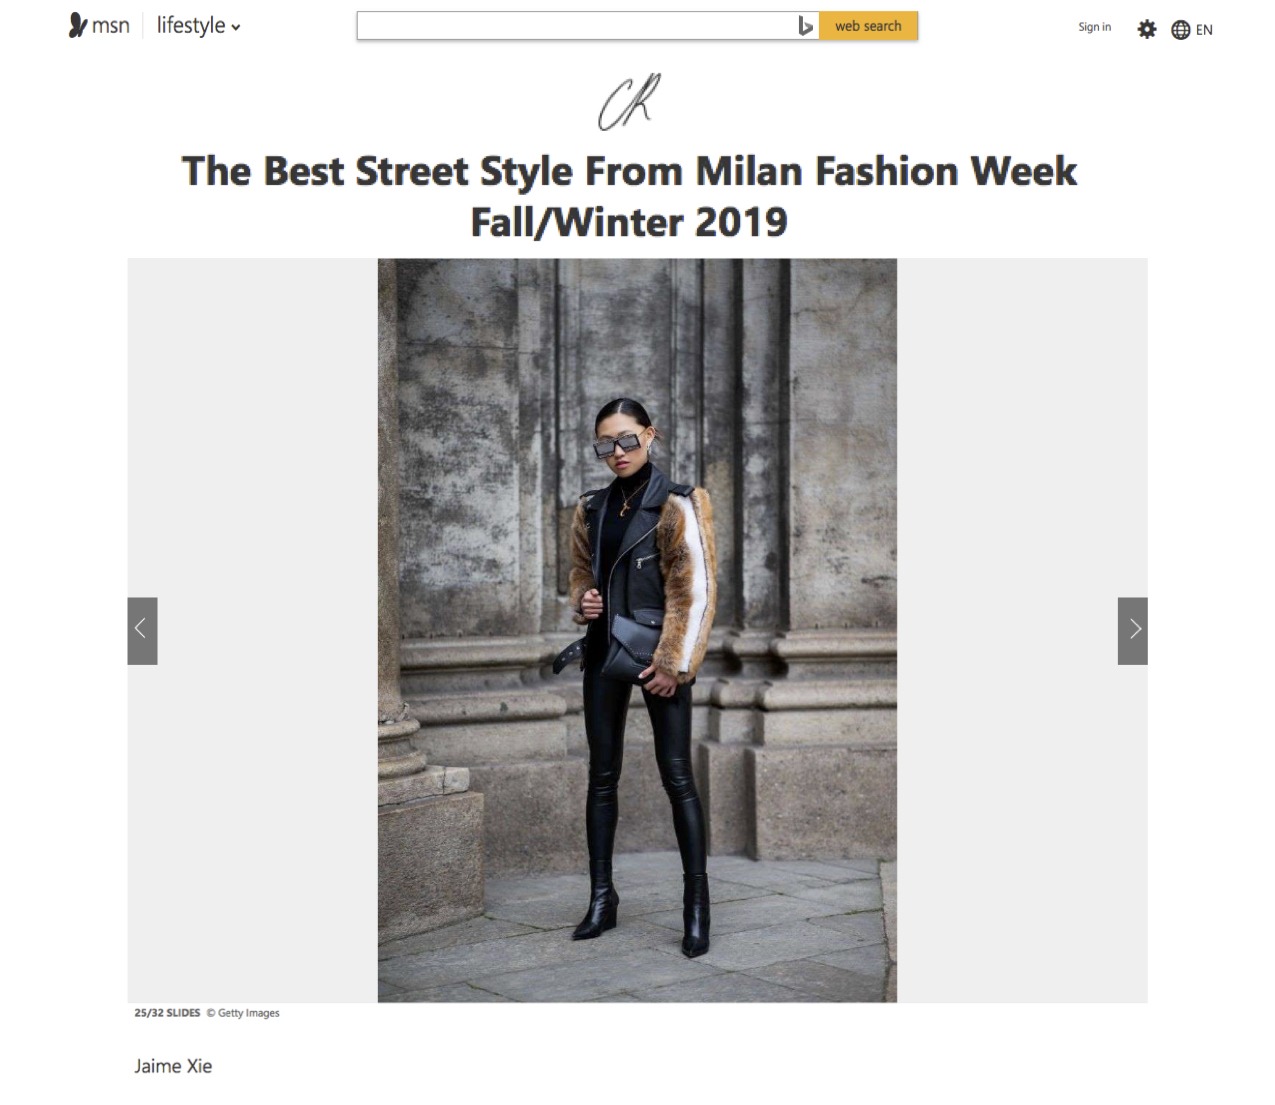 MSN: The Best Street Style From Milan Fashion Week Fall/Winter 2019